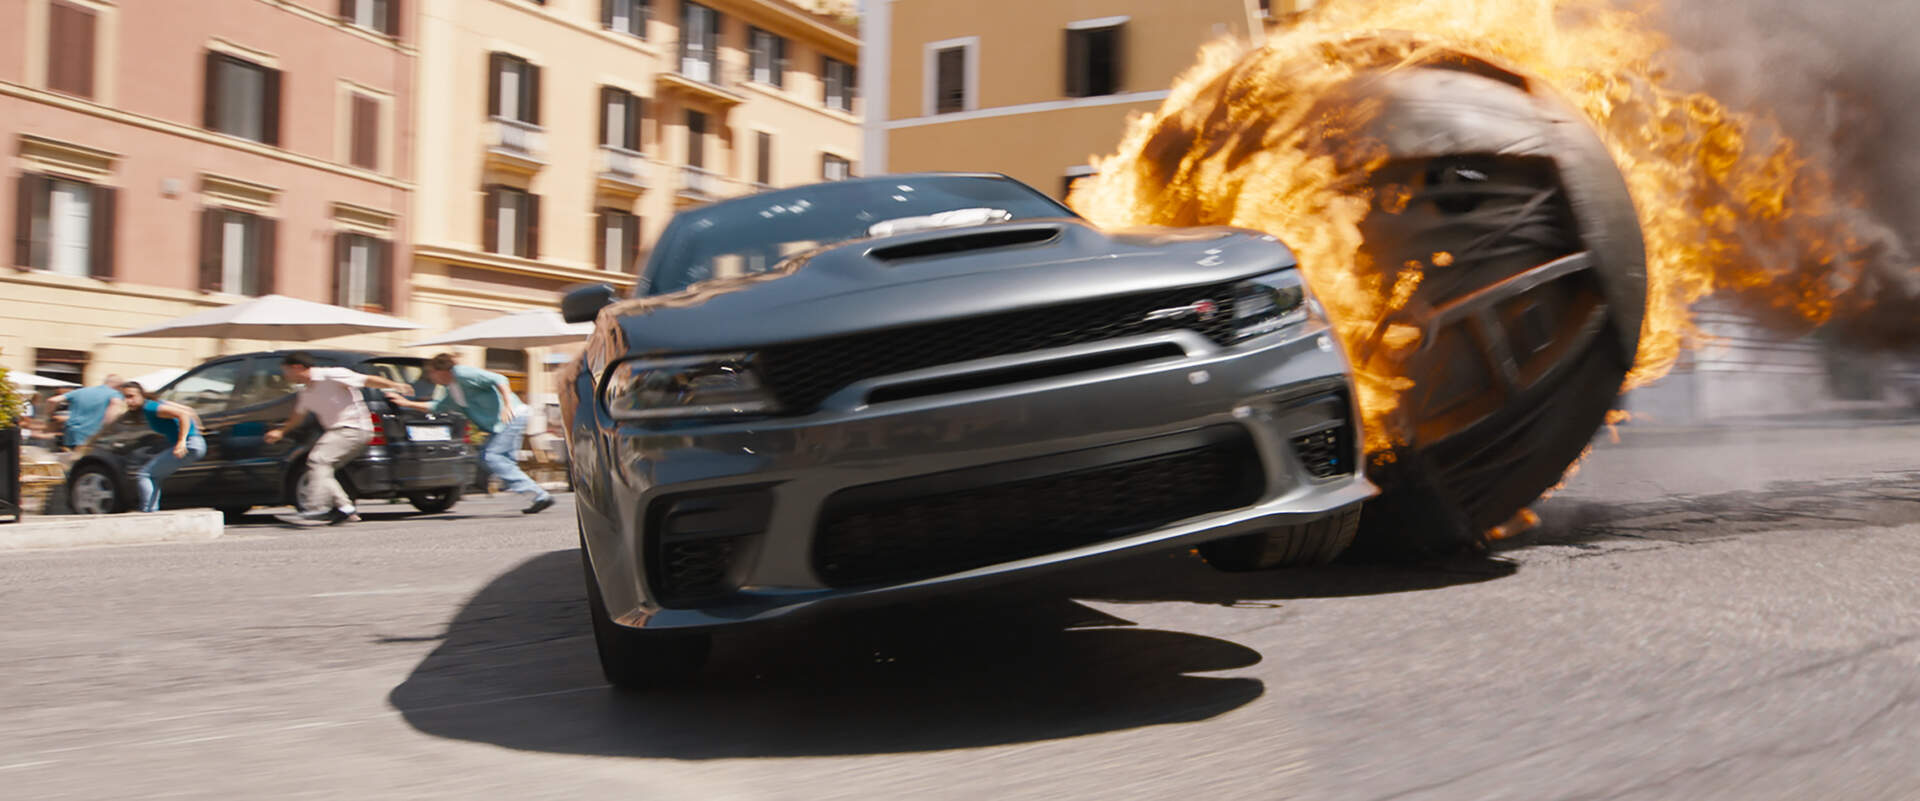 Fast + Furious 10 - Szenenbild 22 von 26